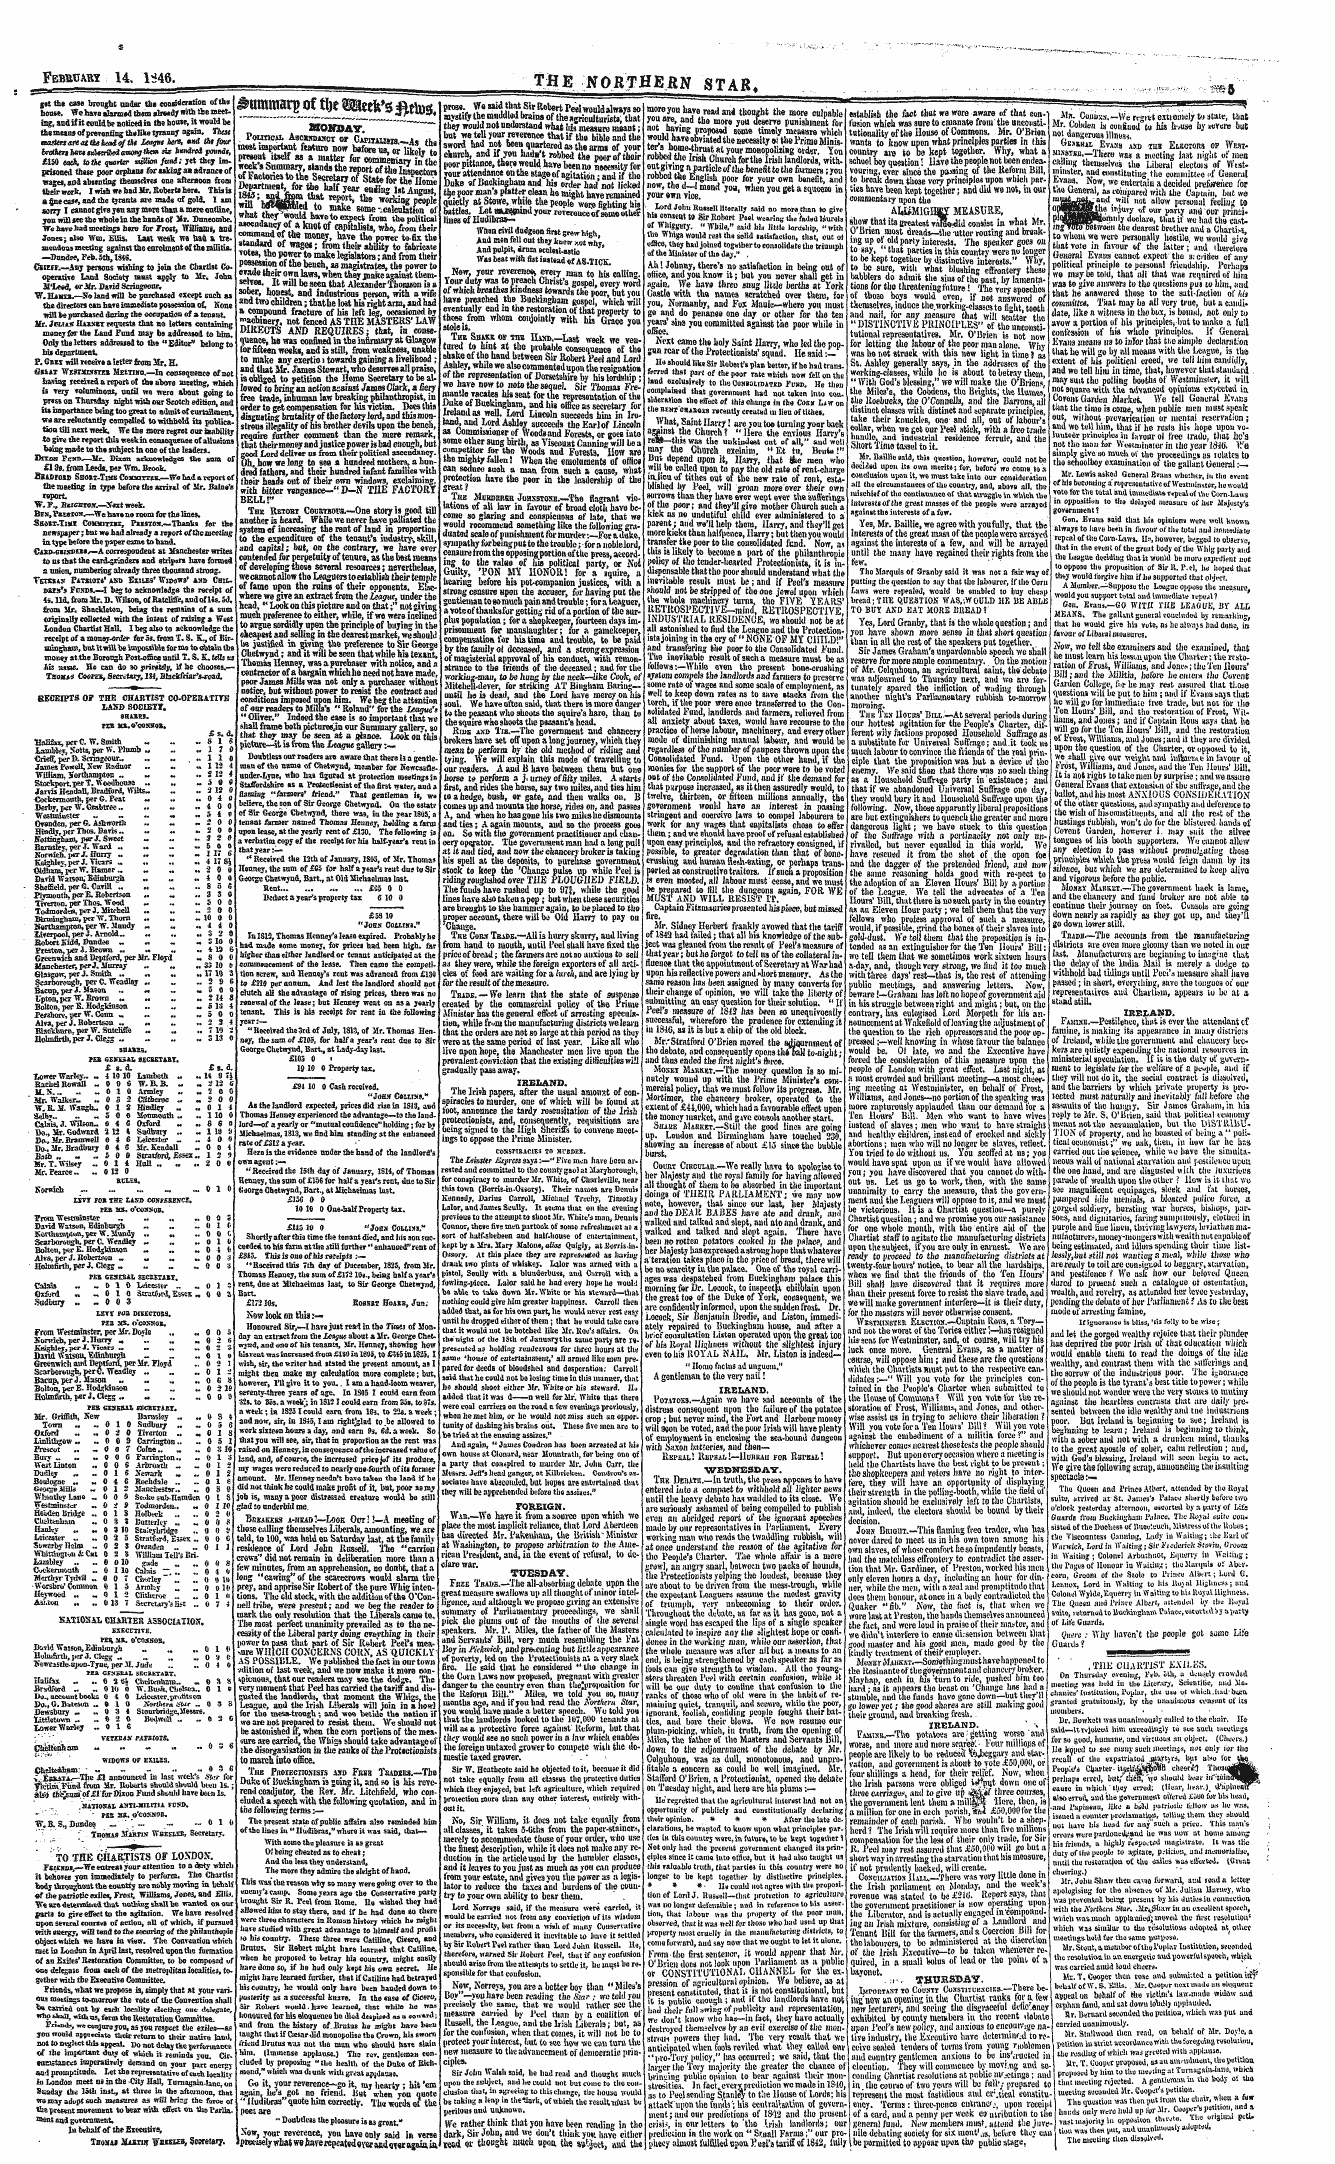 Northern Star (1837-1852): jS F Y, 2nd edition - ^Ummarp T&E Peek's Ftttos